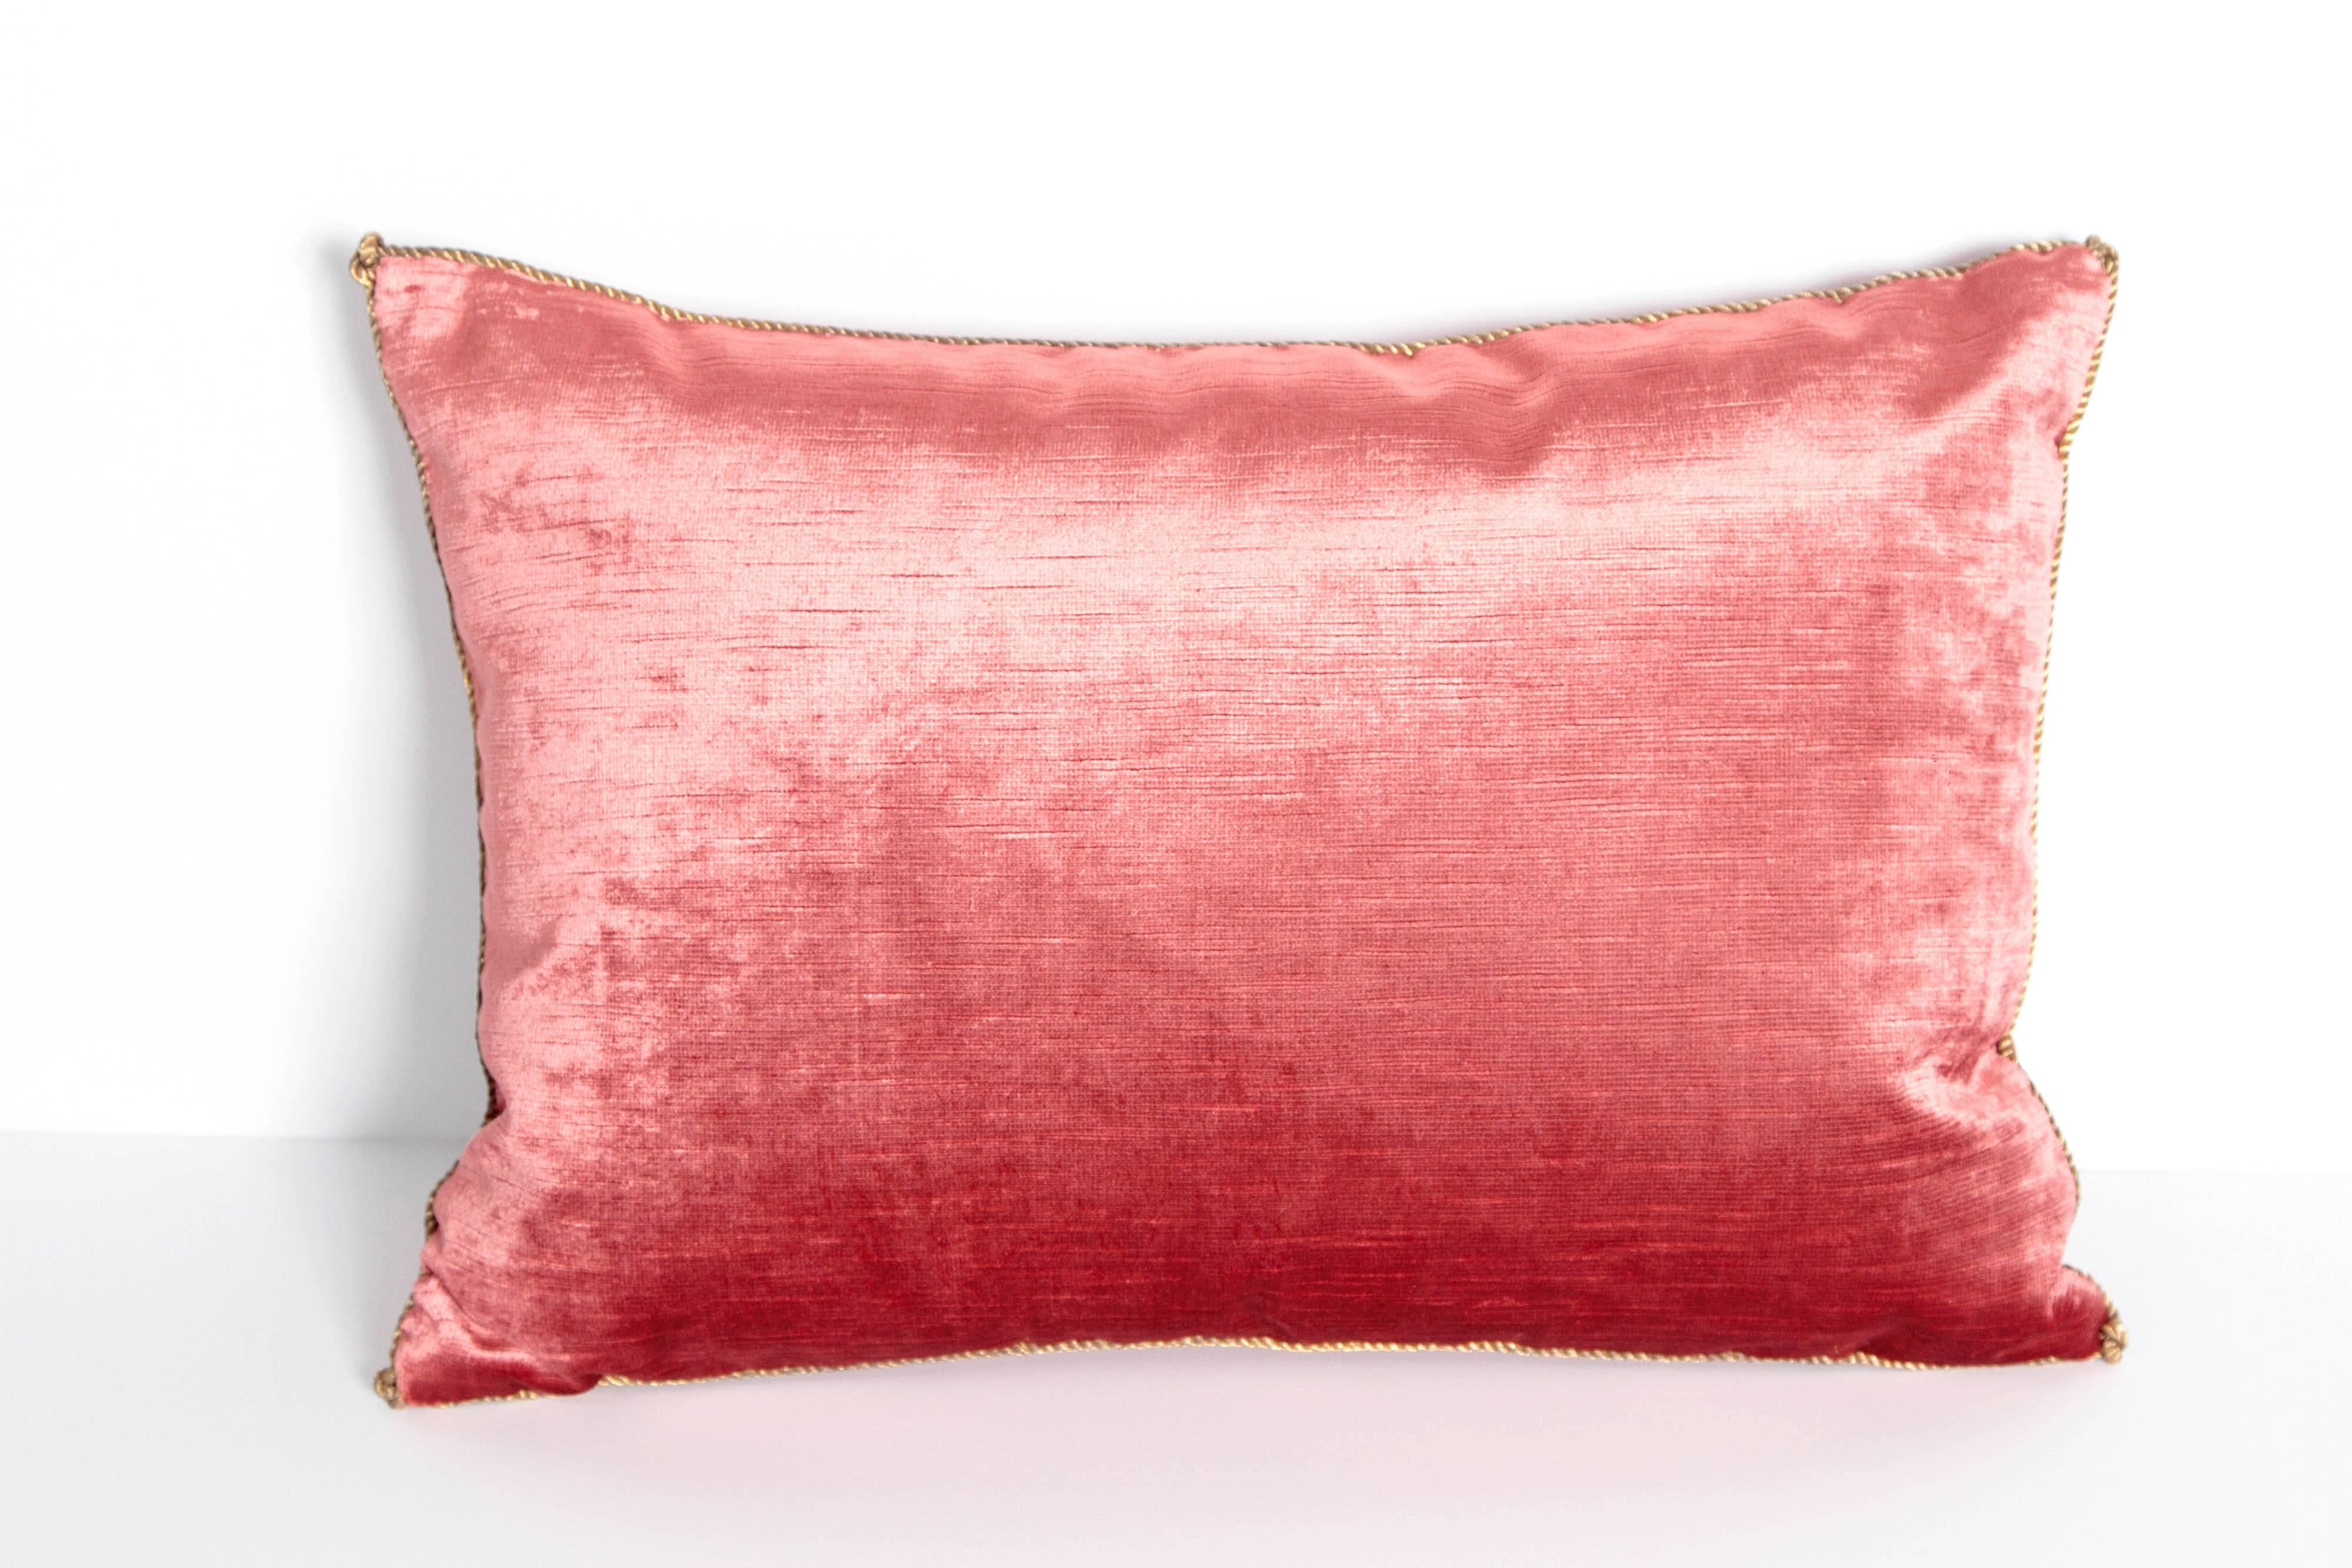 American Antique Textile Pillow by Rebecca Vizard of B. Viz Design